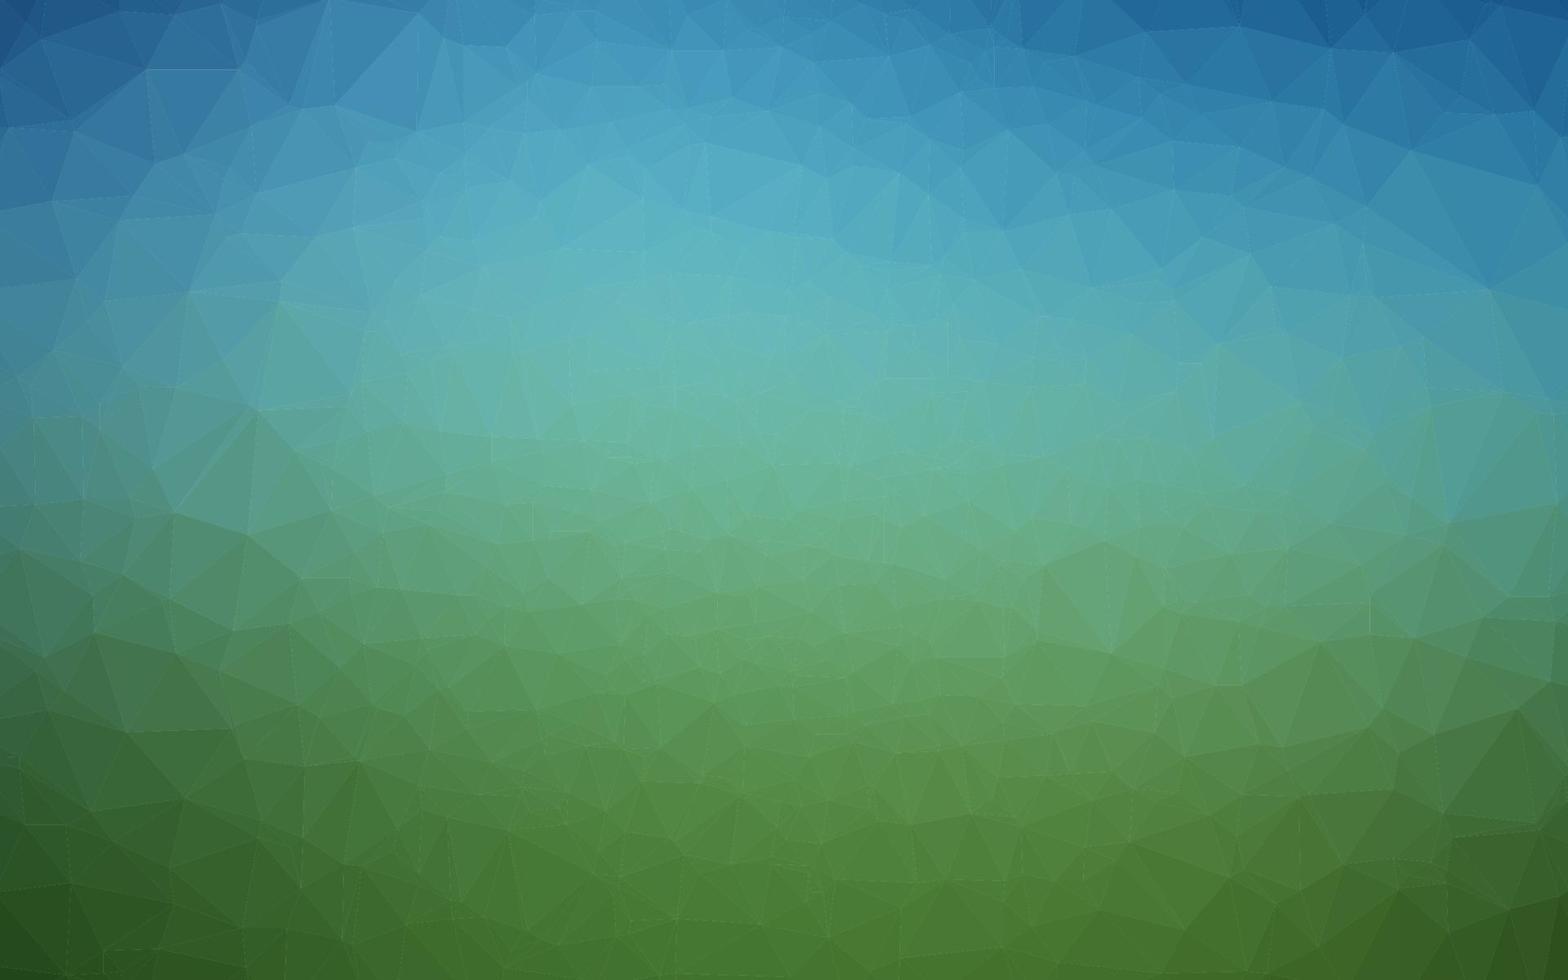 Dark Blue, Green vector polygonal pattern.